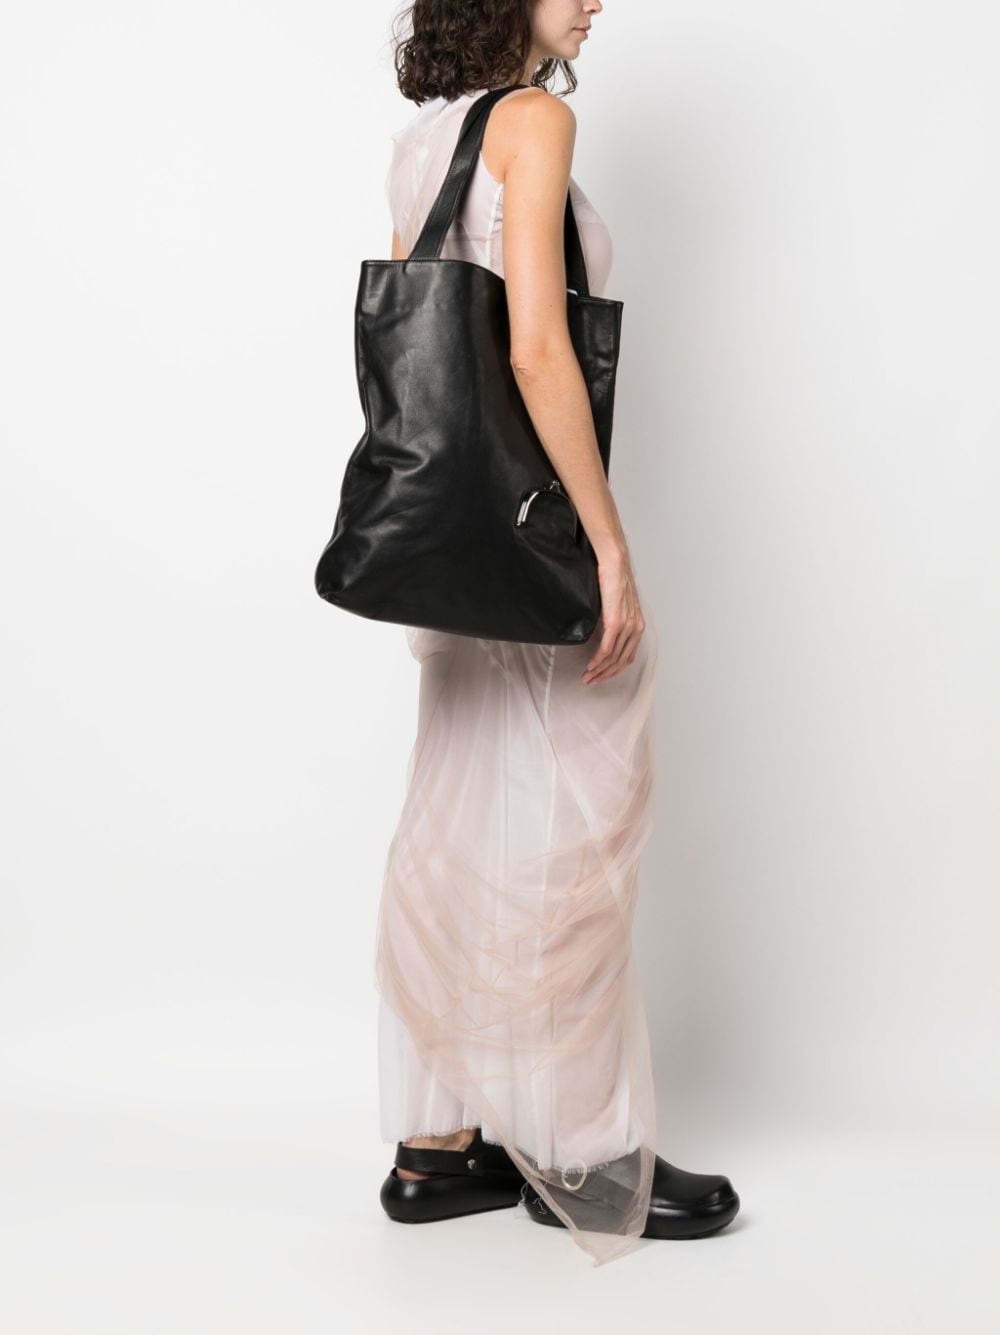 Yohji Yamamoto Clasp leather tote bag | REVERSIBLE